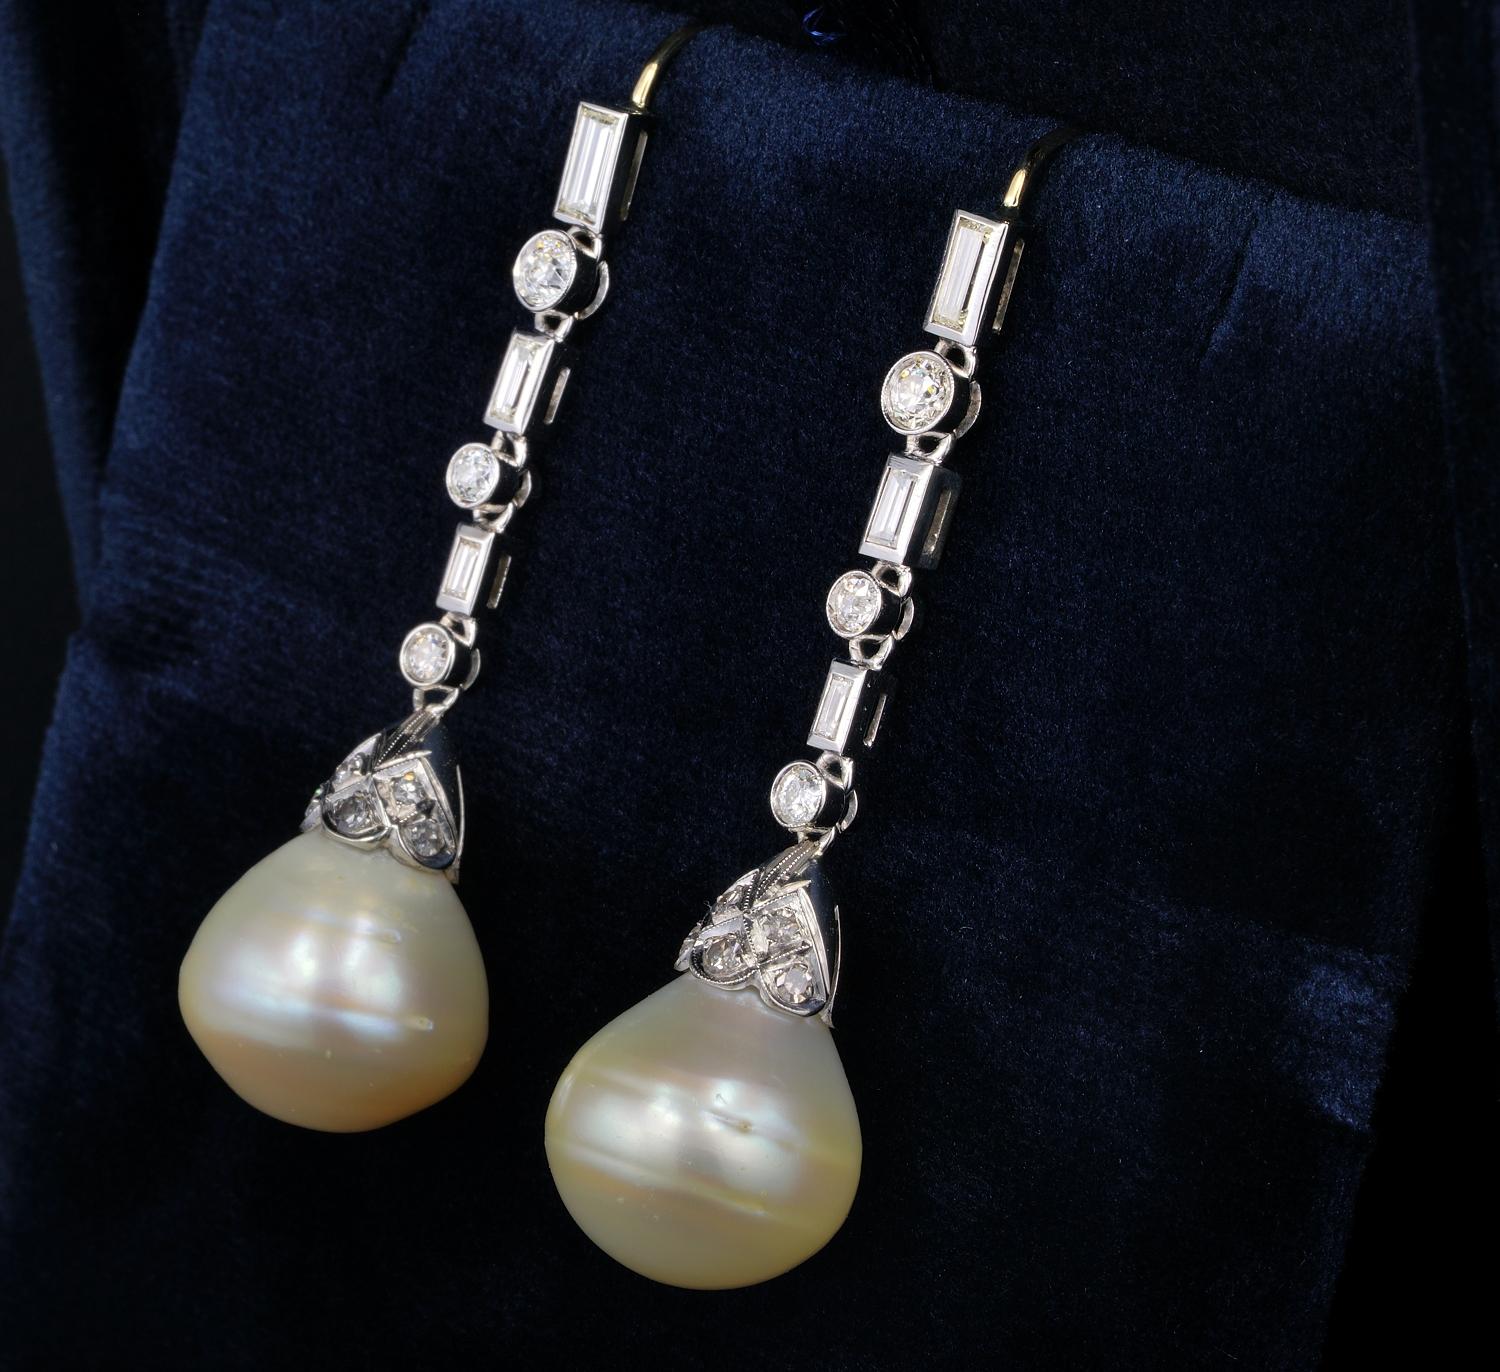 Late Deco Jumbo Sized South Sea Pearl 3.0 Carat Diamond Pendant Earrings 1